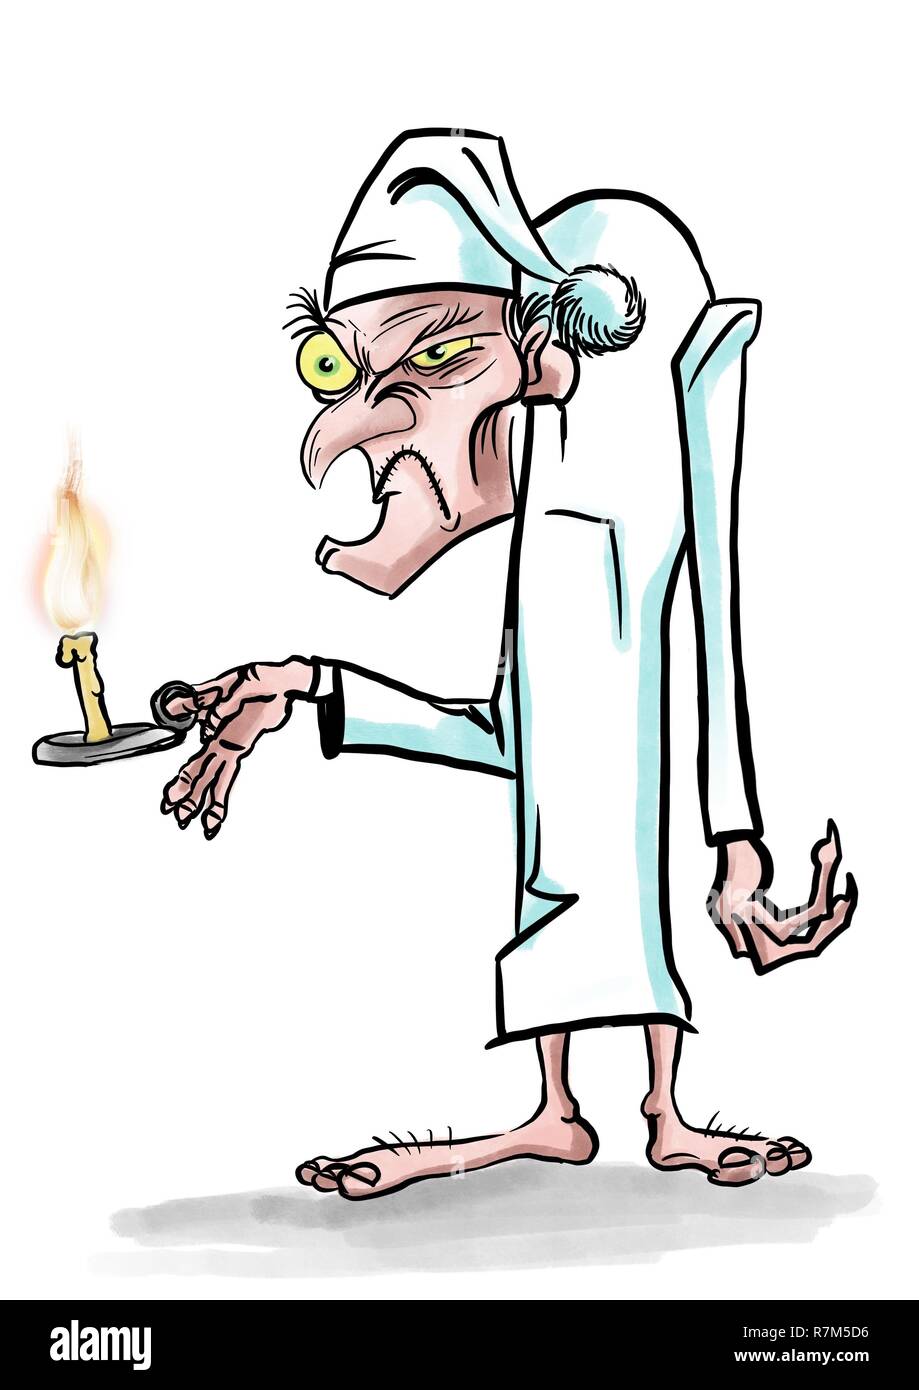 Ebenezer Scrooge cartoon character illustrated mascot Stock Photo